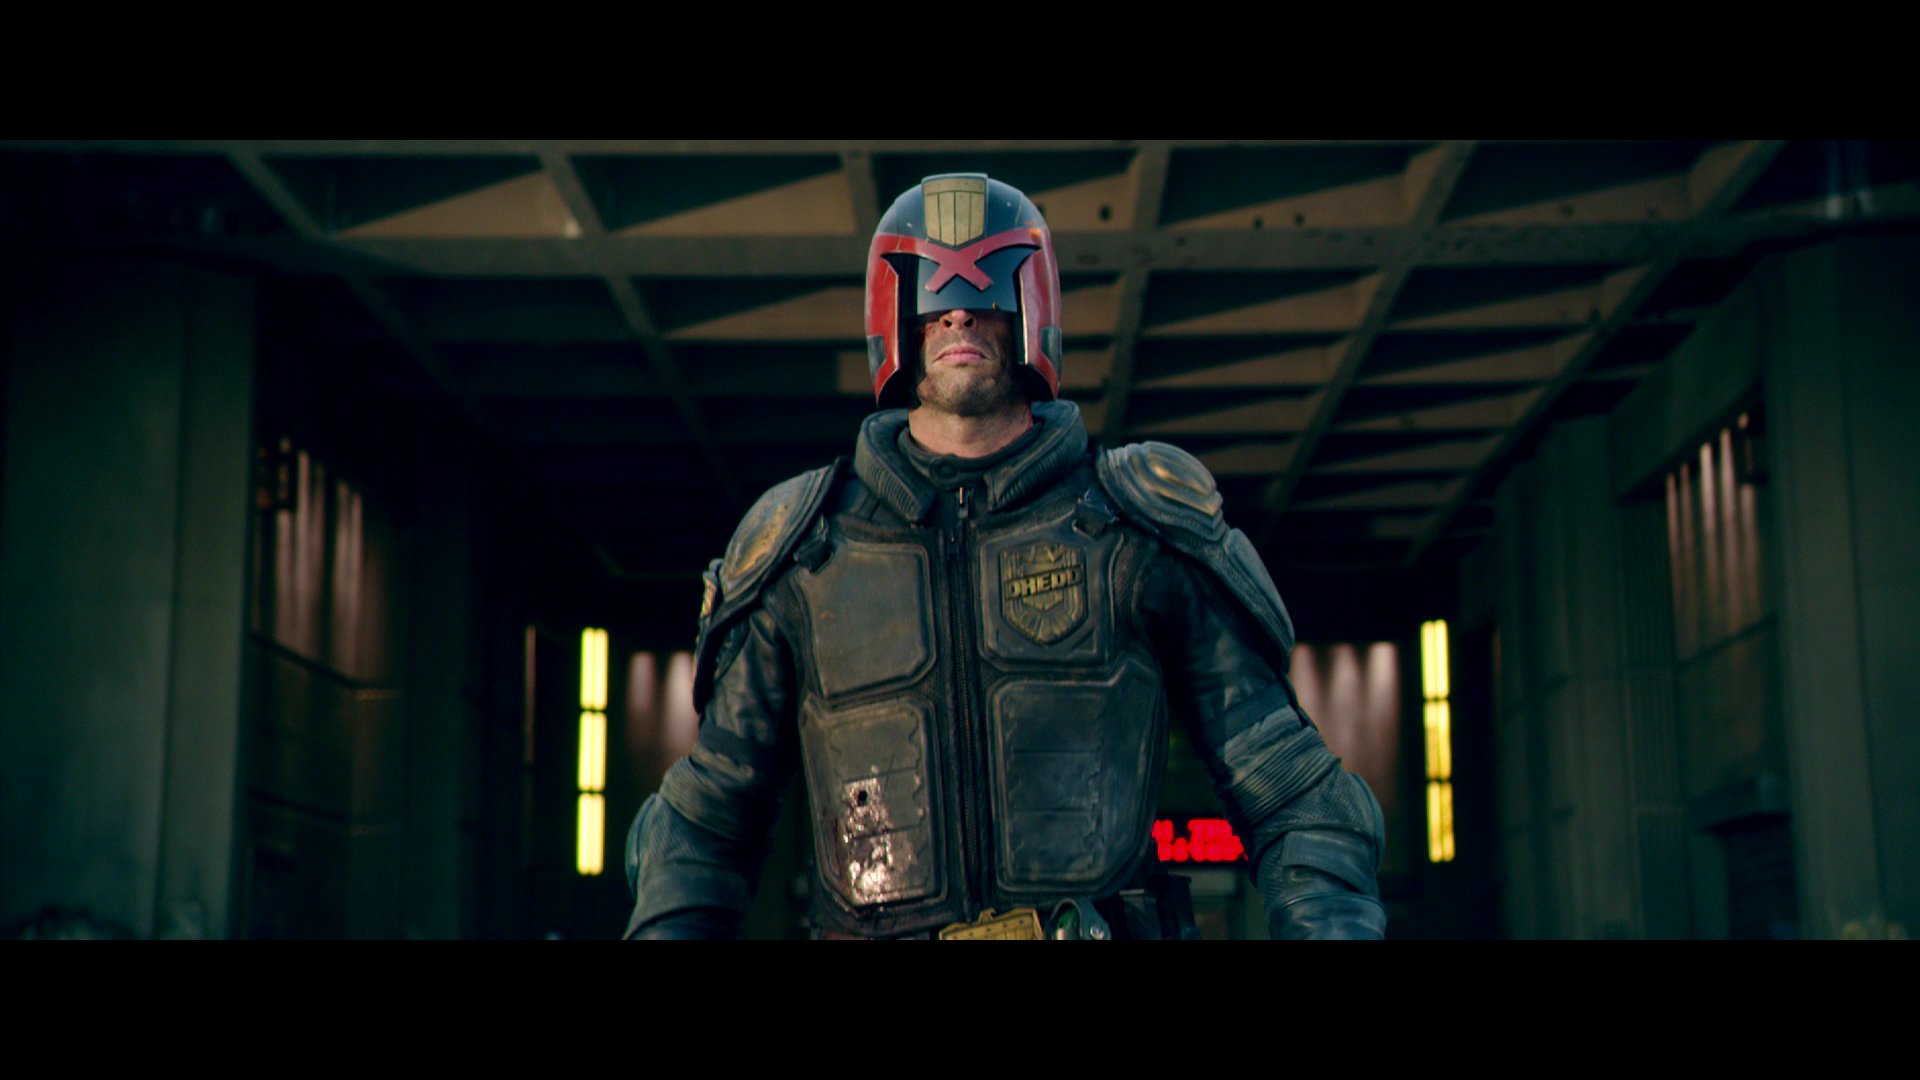 Dredd Sci Fi Action Superhero Judge Wallpaper Background